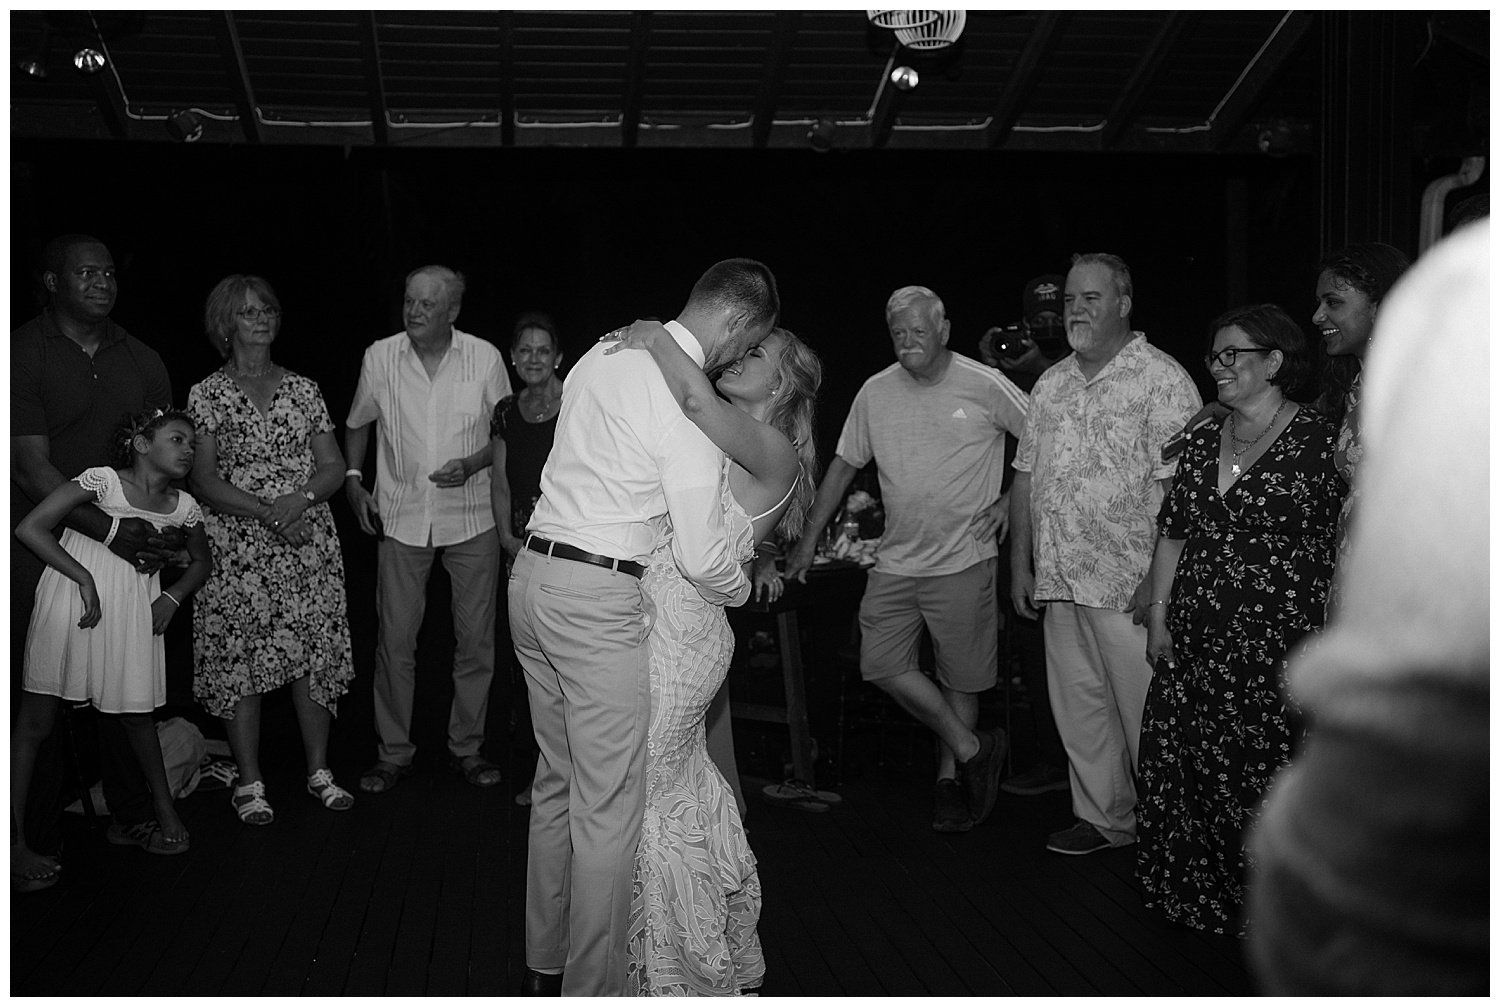 Dancing Photos from Wedding Reception 